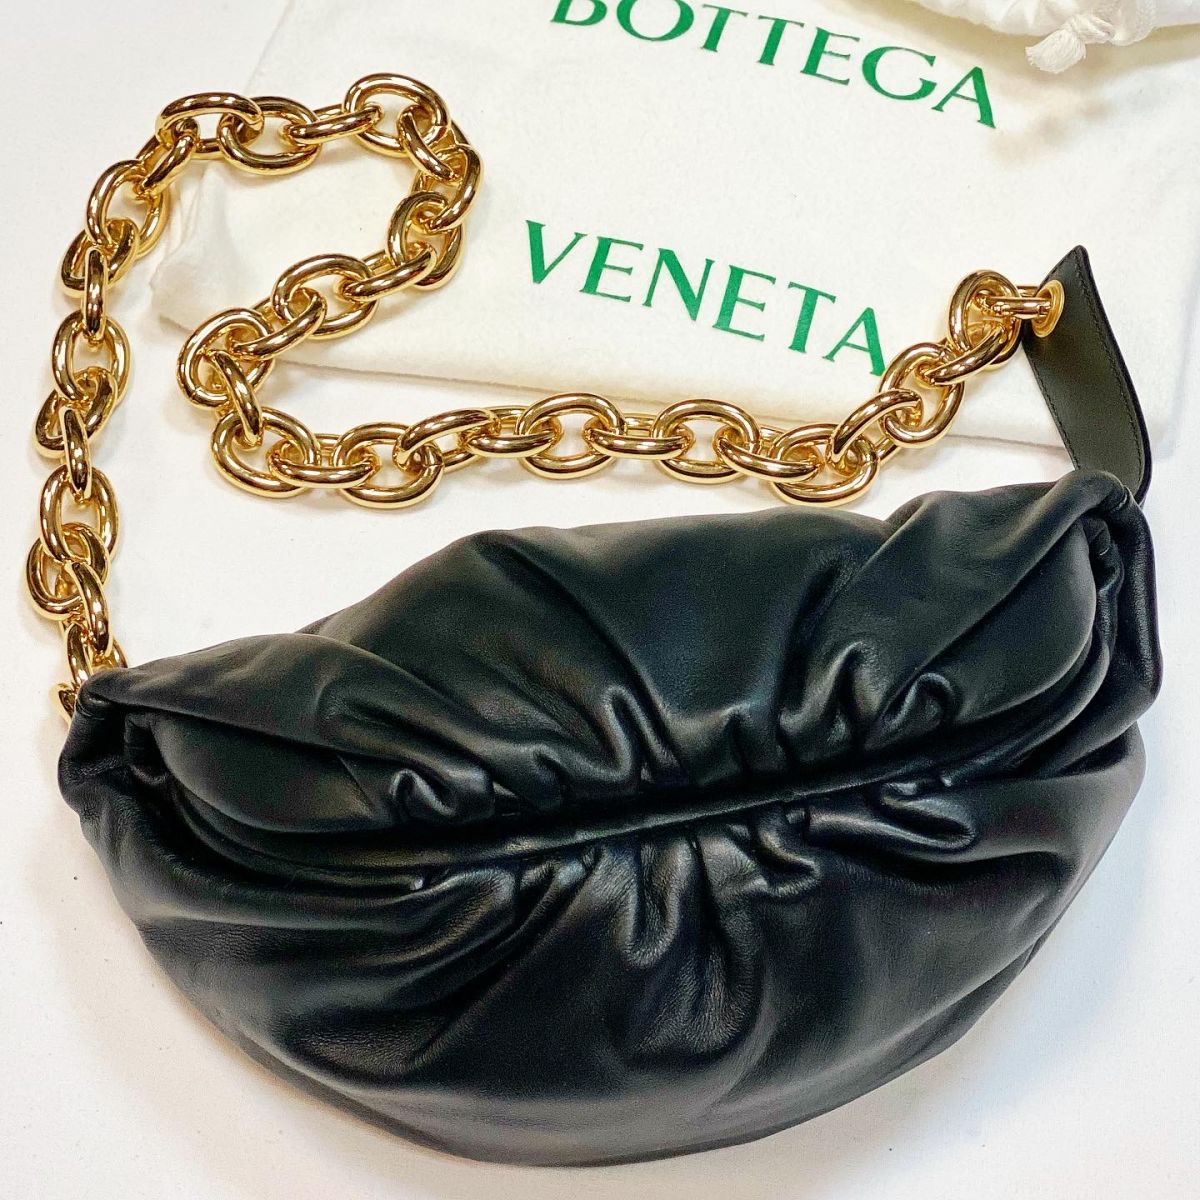 сумка Bottega Veneta размер 23/12 цена 61 540 руб 